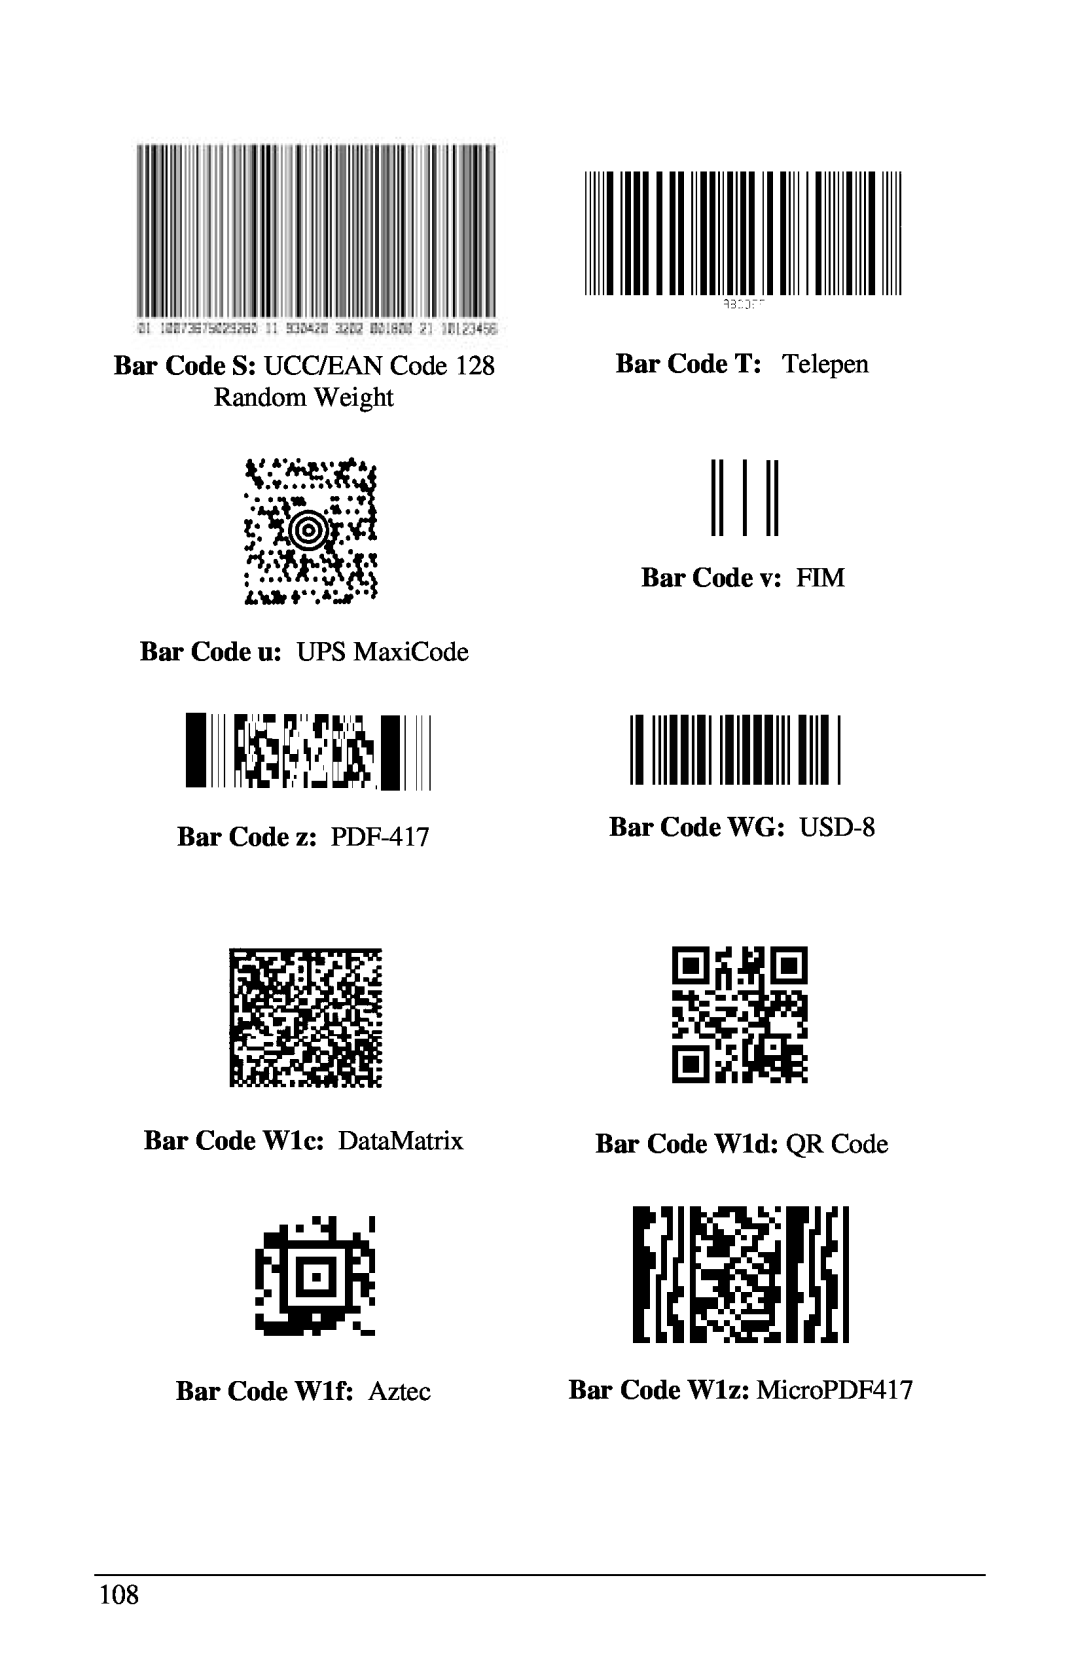 Brady 6441, 3481, 2461 Bar Code T Telepen, Bar Code v FIM Bar Code u UPS MaxiCode, Bar Code z PDF-417, Bar Code WG USD-8 